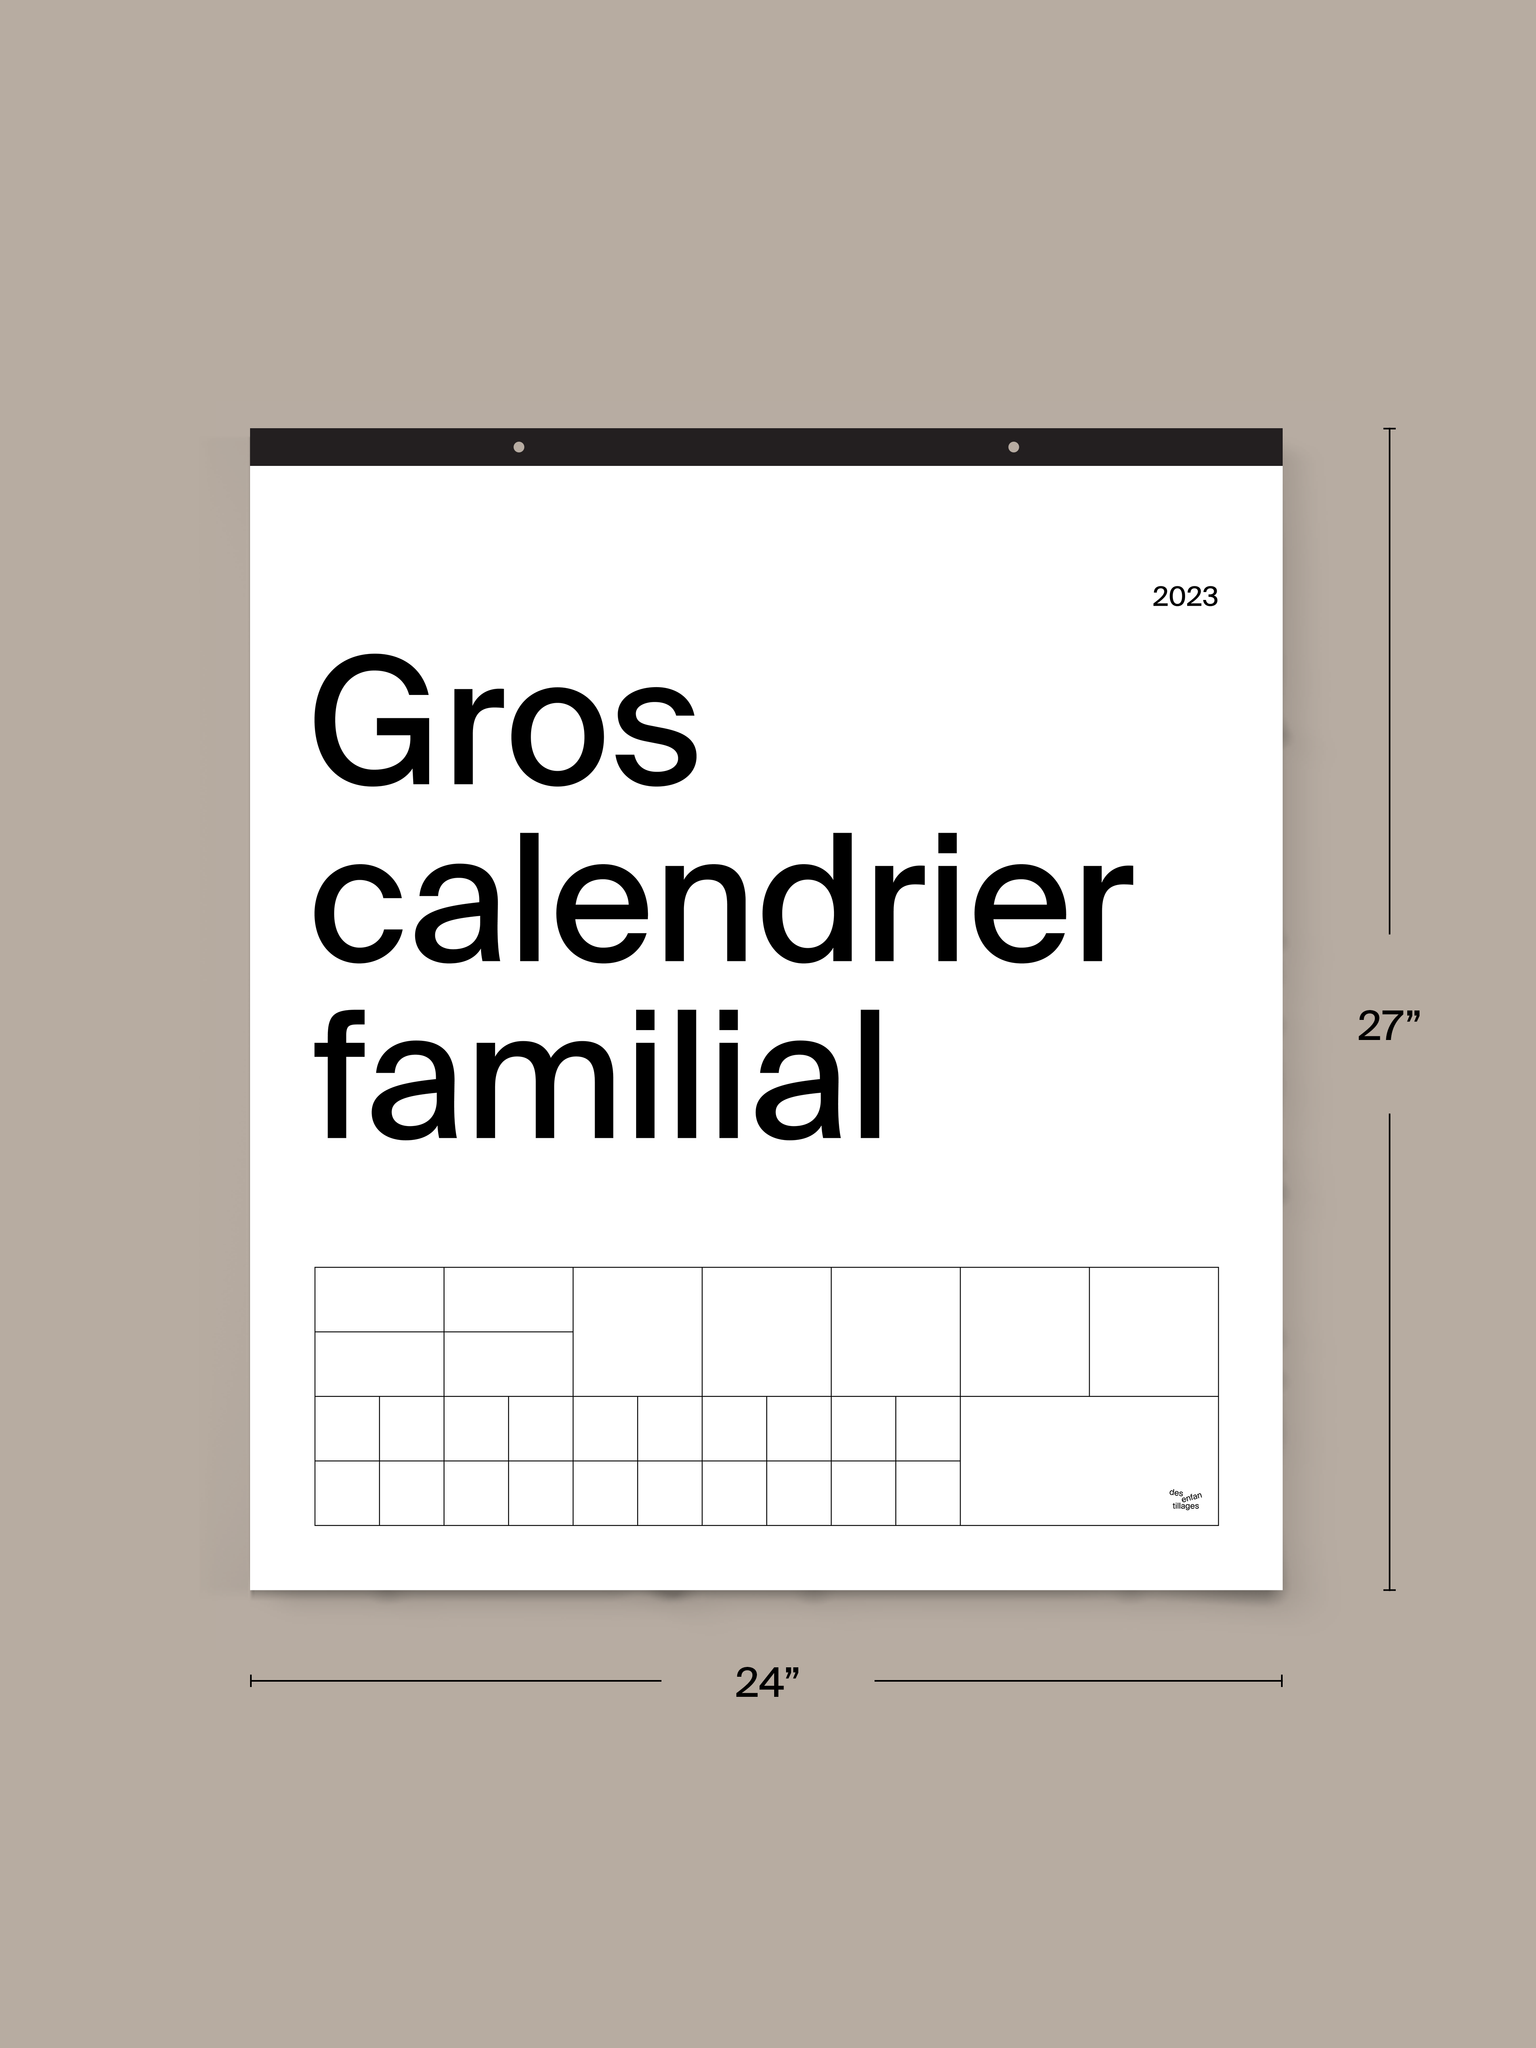 Gros calendrier familial — 2023